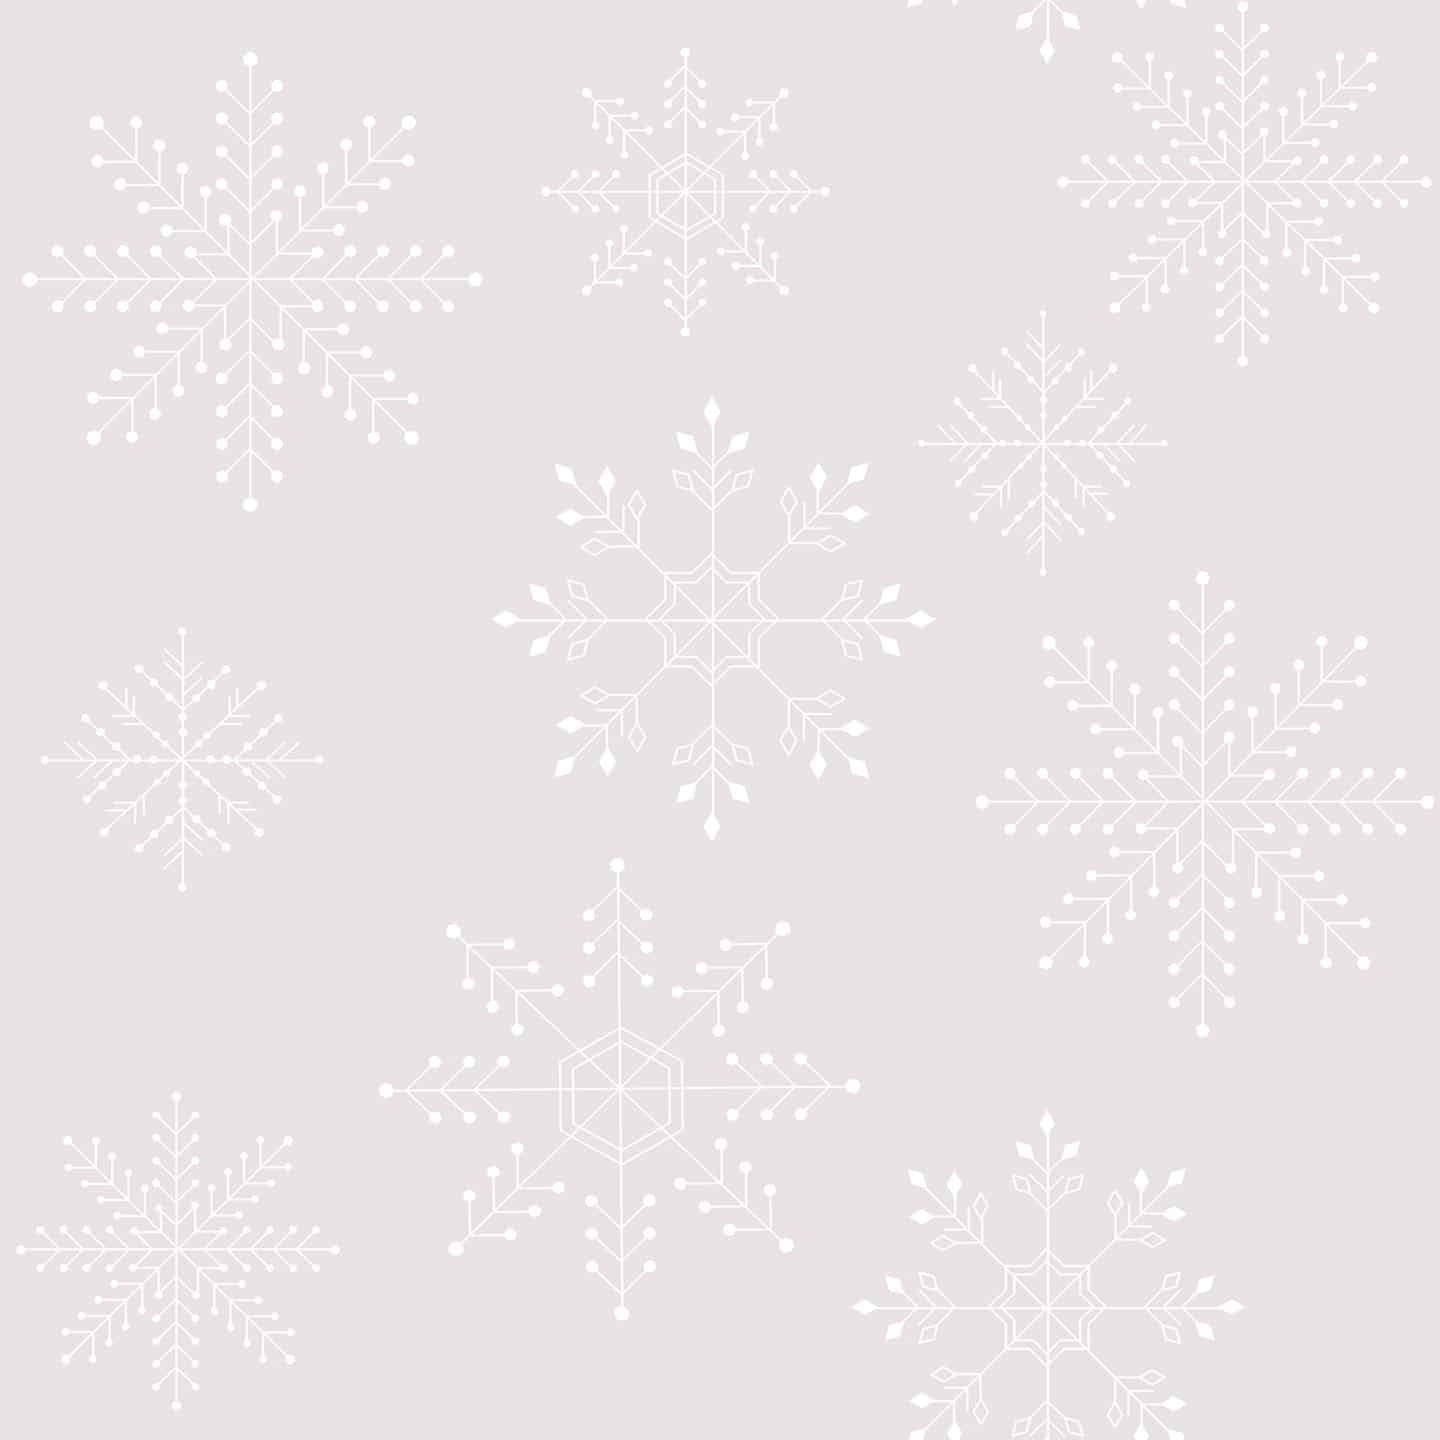 A light grey background with white snowflakes - Snowflake